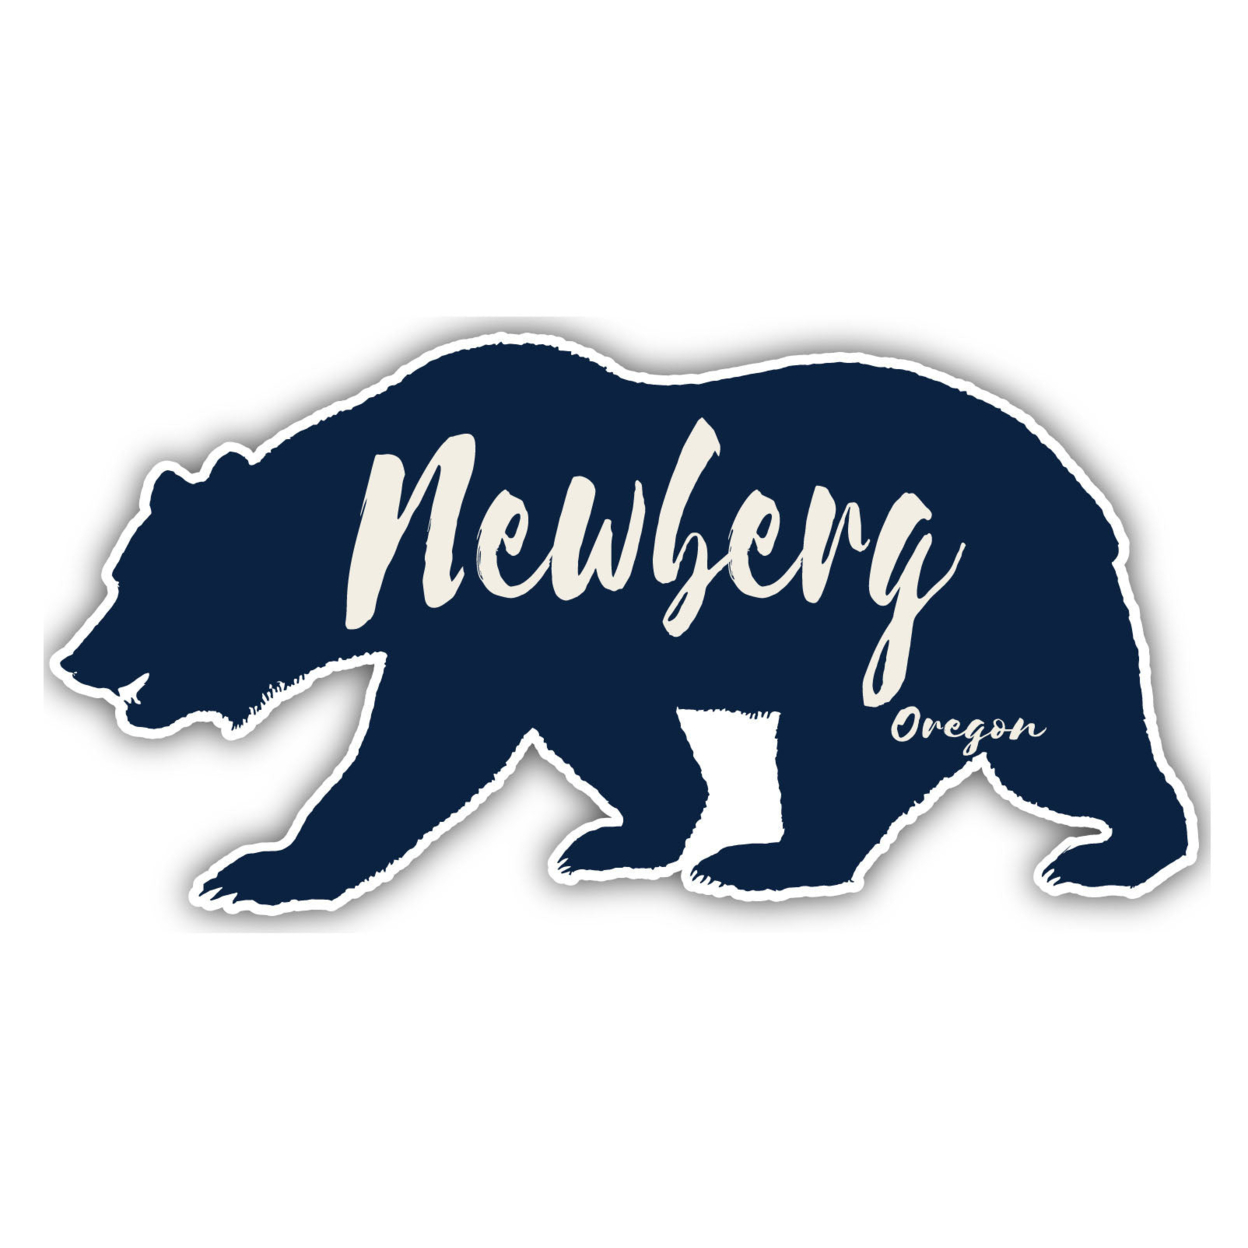 Newberg Oregon Souvenir Decorative Stickers (Choose Theme And Size) - Single Unit, 2-Inch, Bear